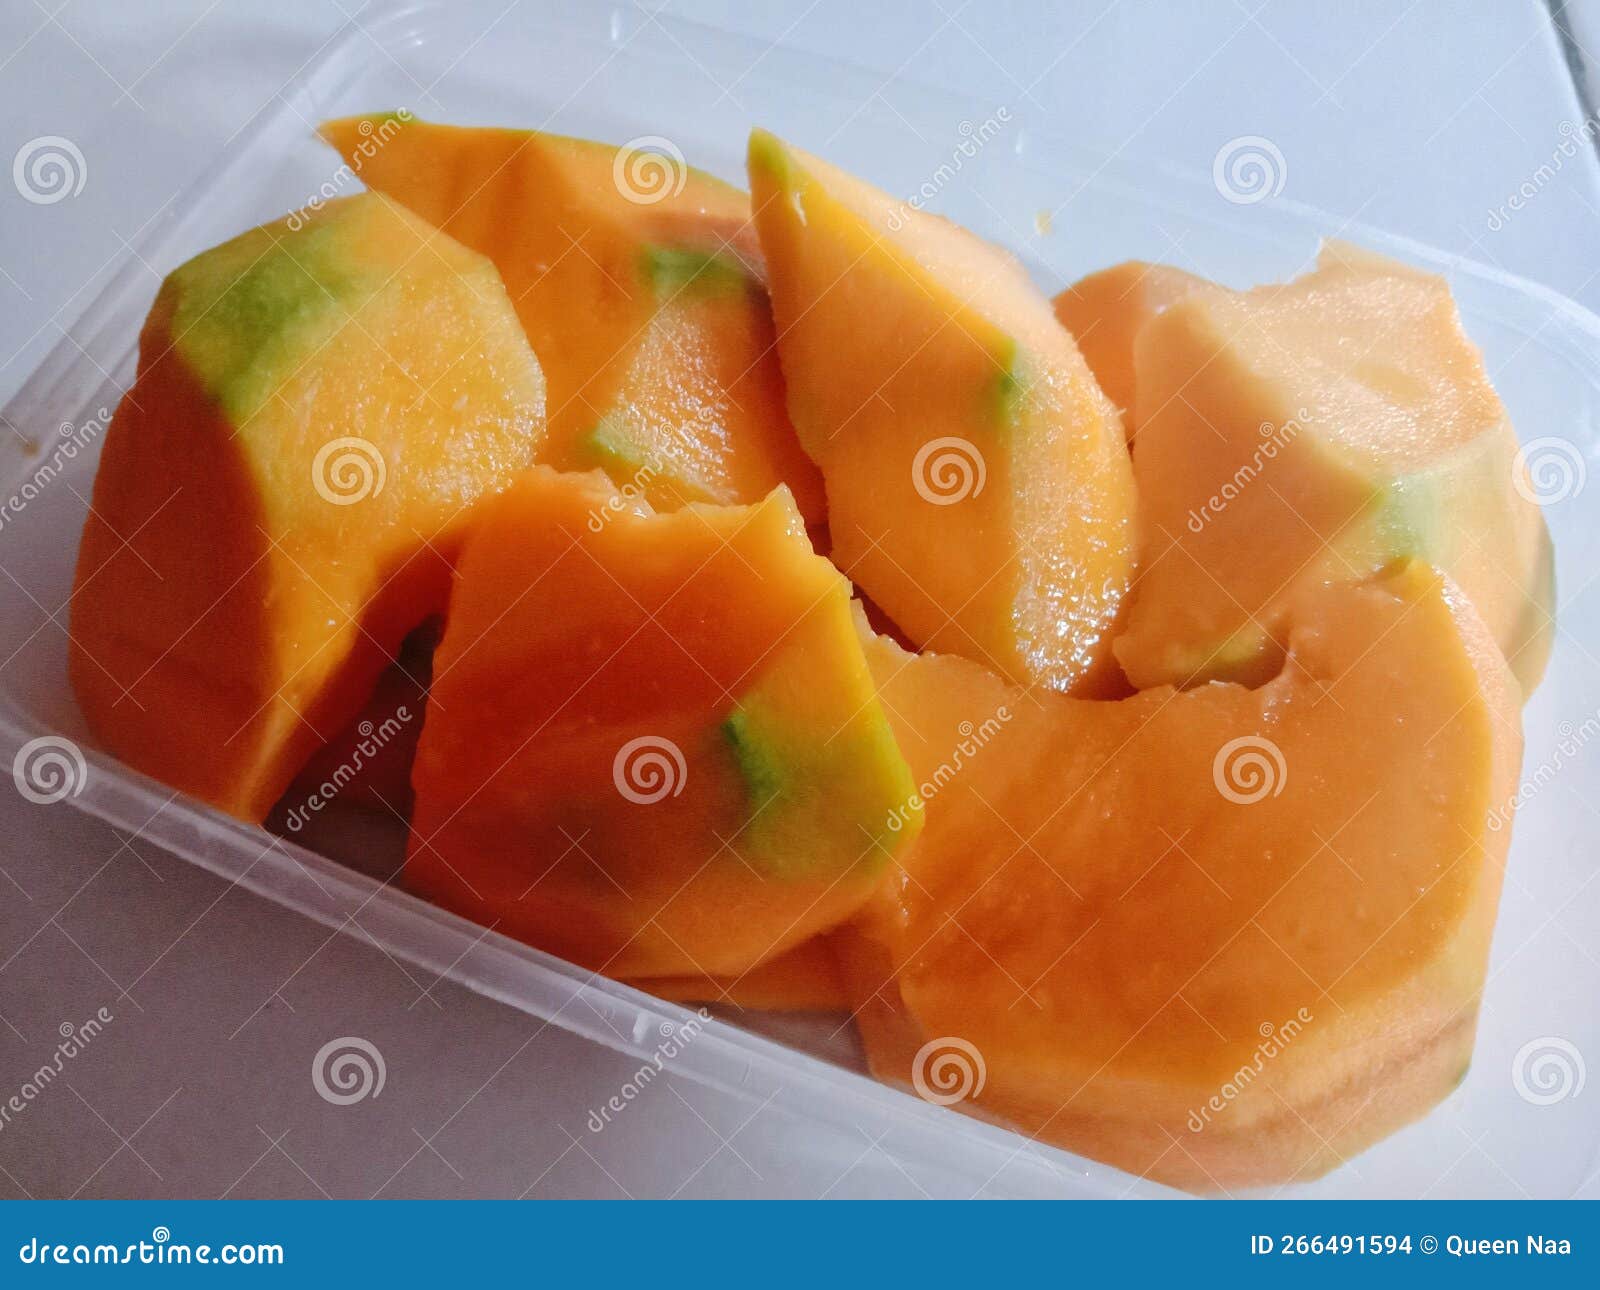 fruit mango food dissert fresh healthy lifestyle healthyfood